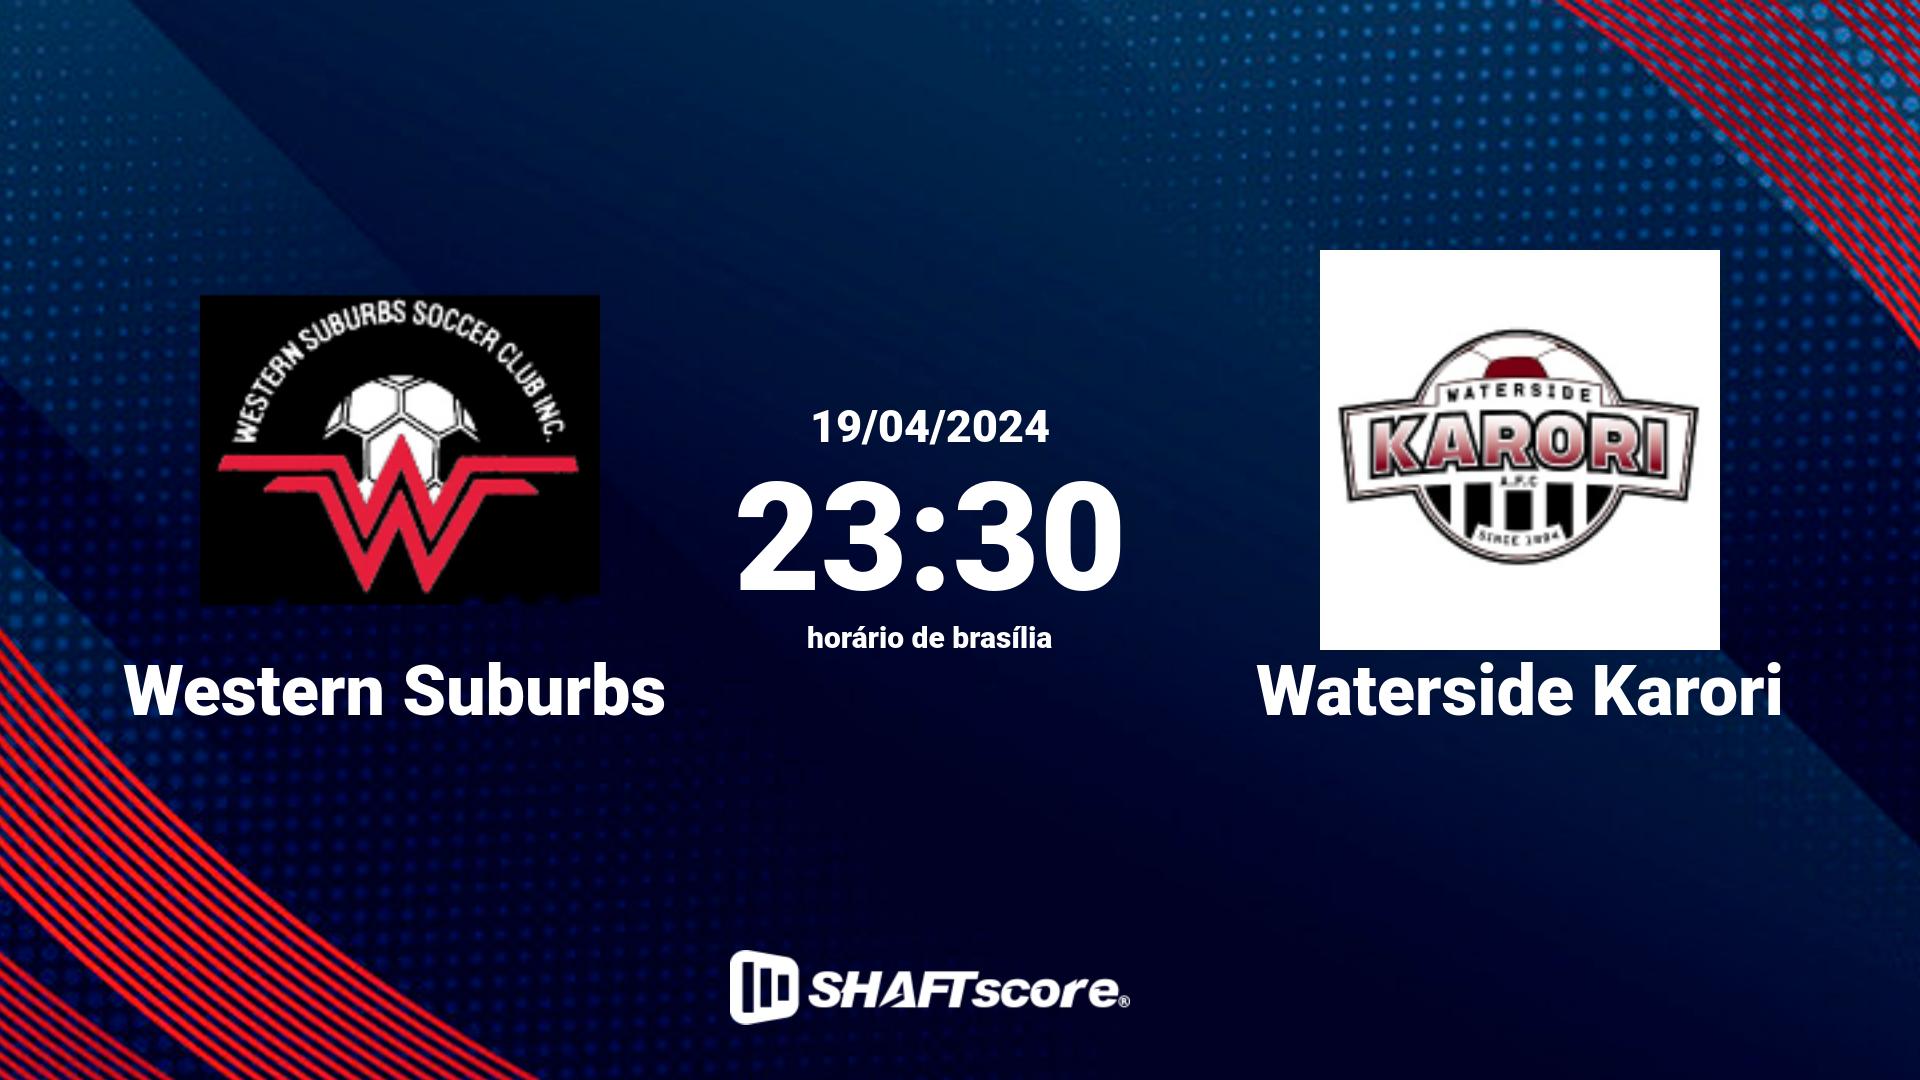 Estatísticas do jogo Western Suburbs vs Waterside Karori 19.04 23:30